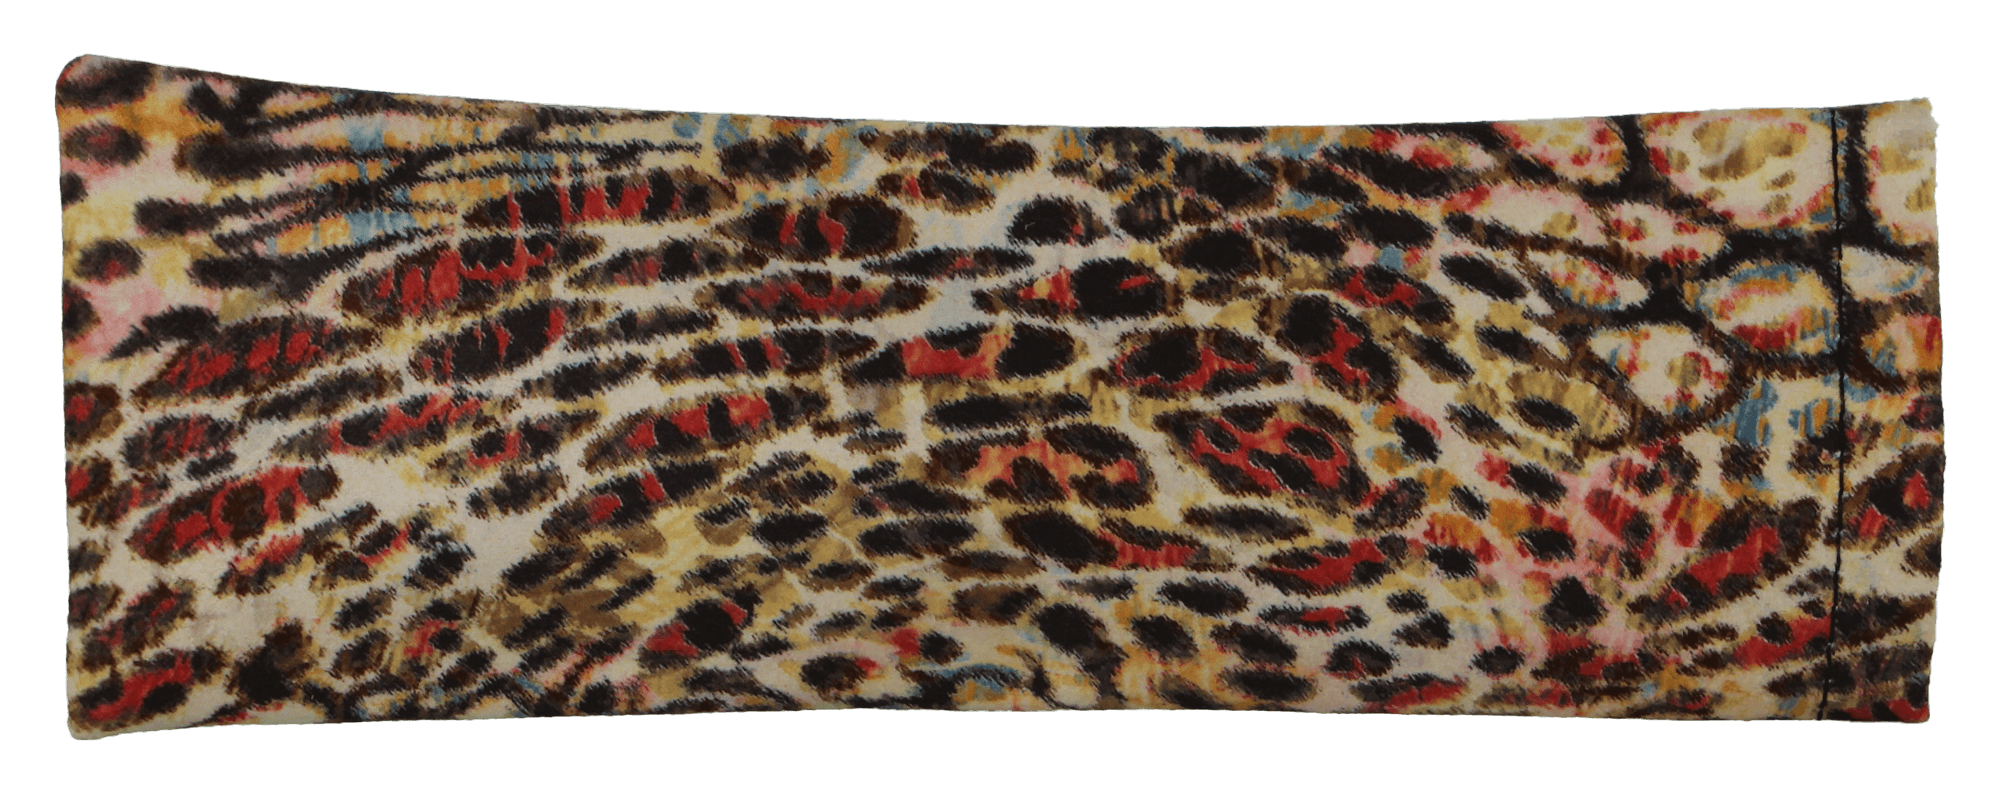 Fertiglesebrille 04891 Leoparden-Print matt +1,50 Dioptrien